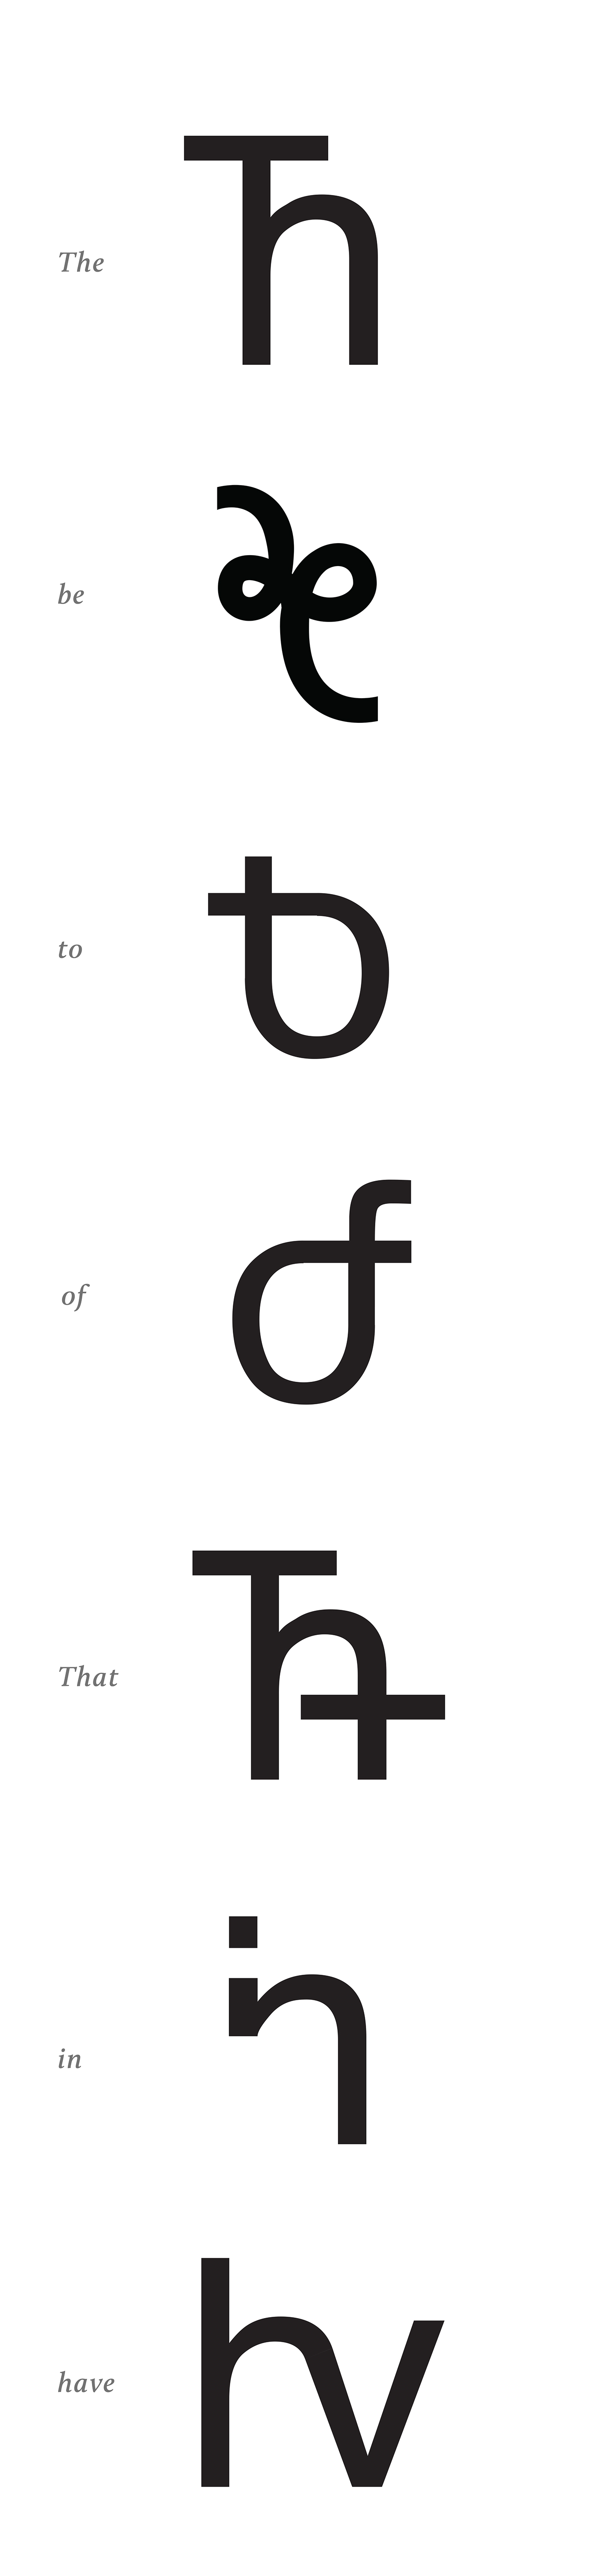 language ampersand symbols words Typeface future